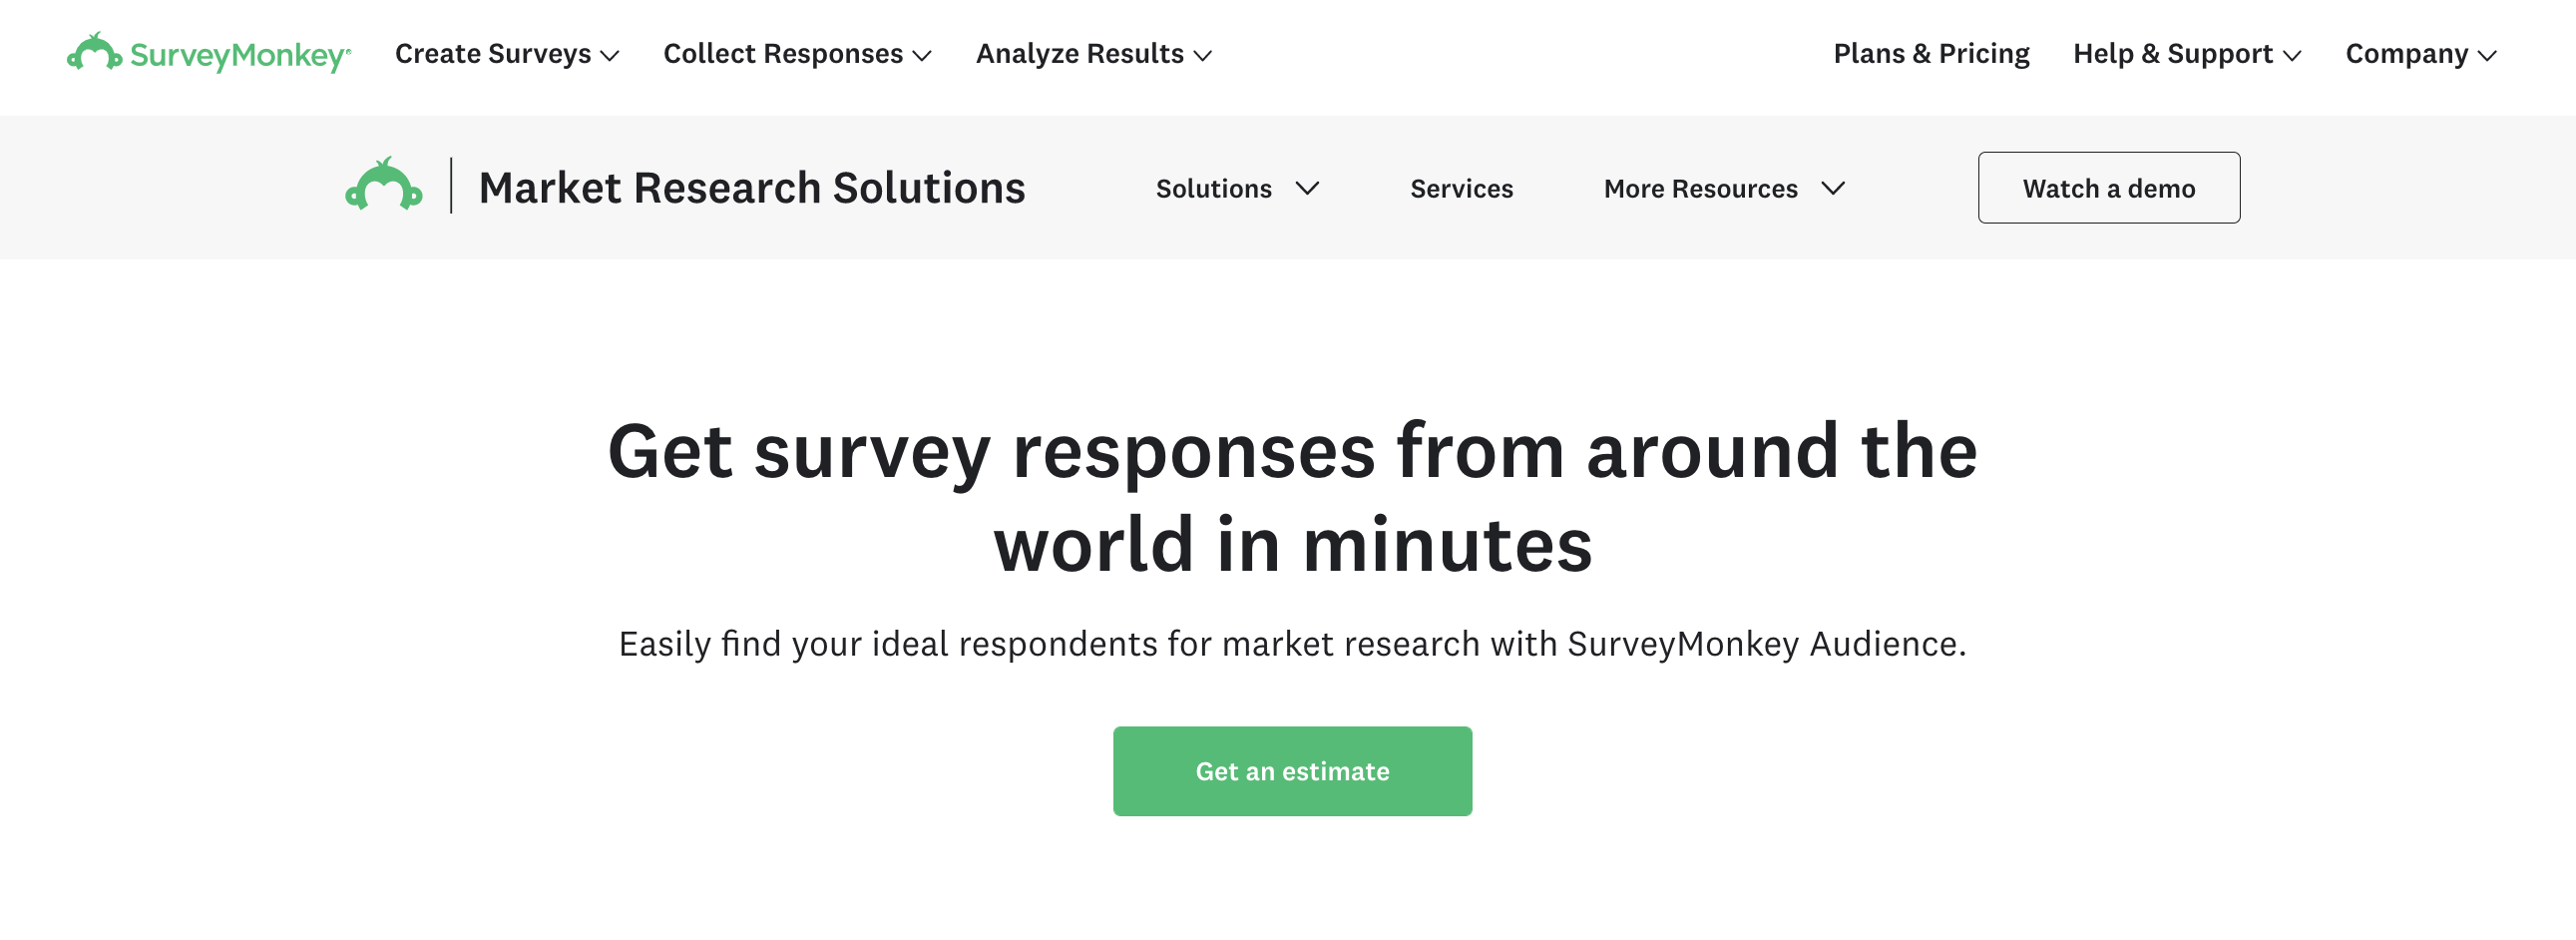 SurveyMonkey Audience homepage screenshot